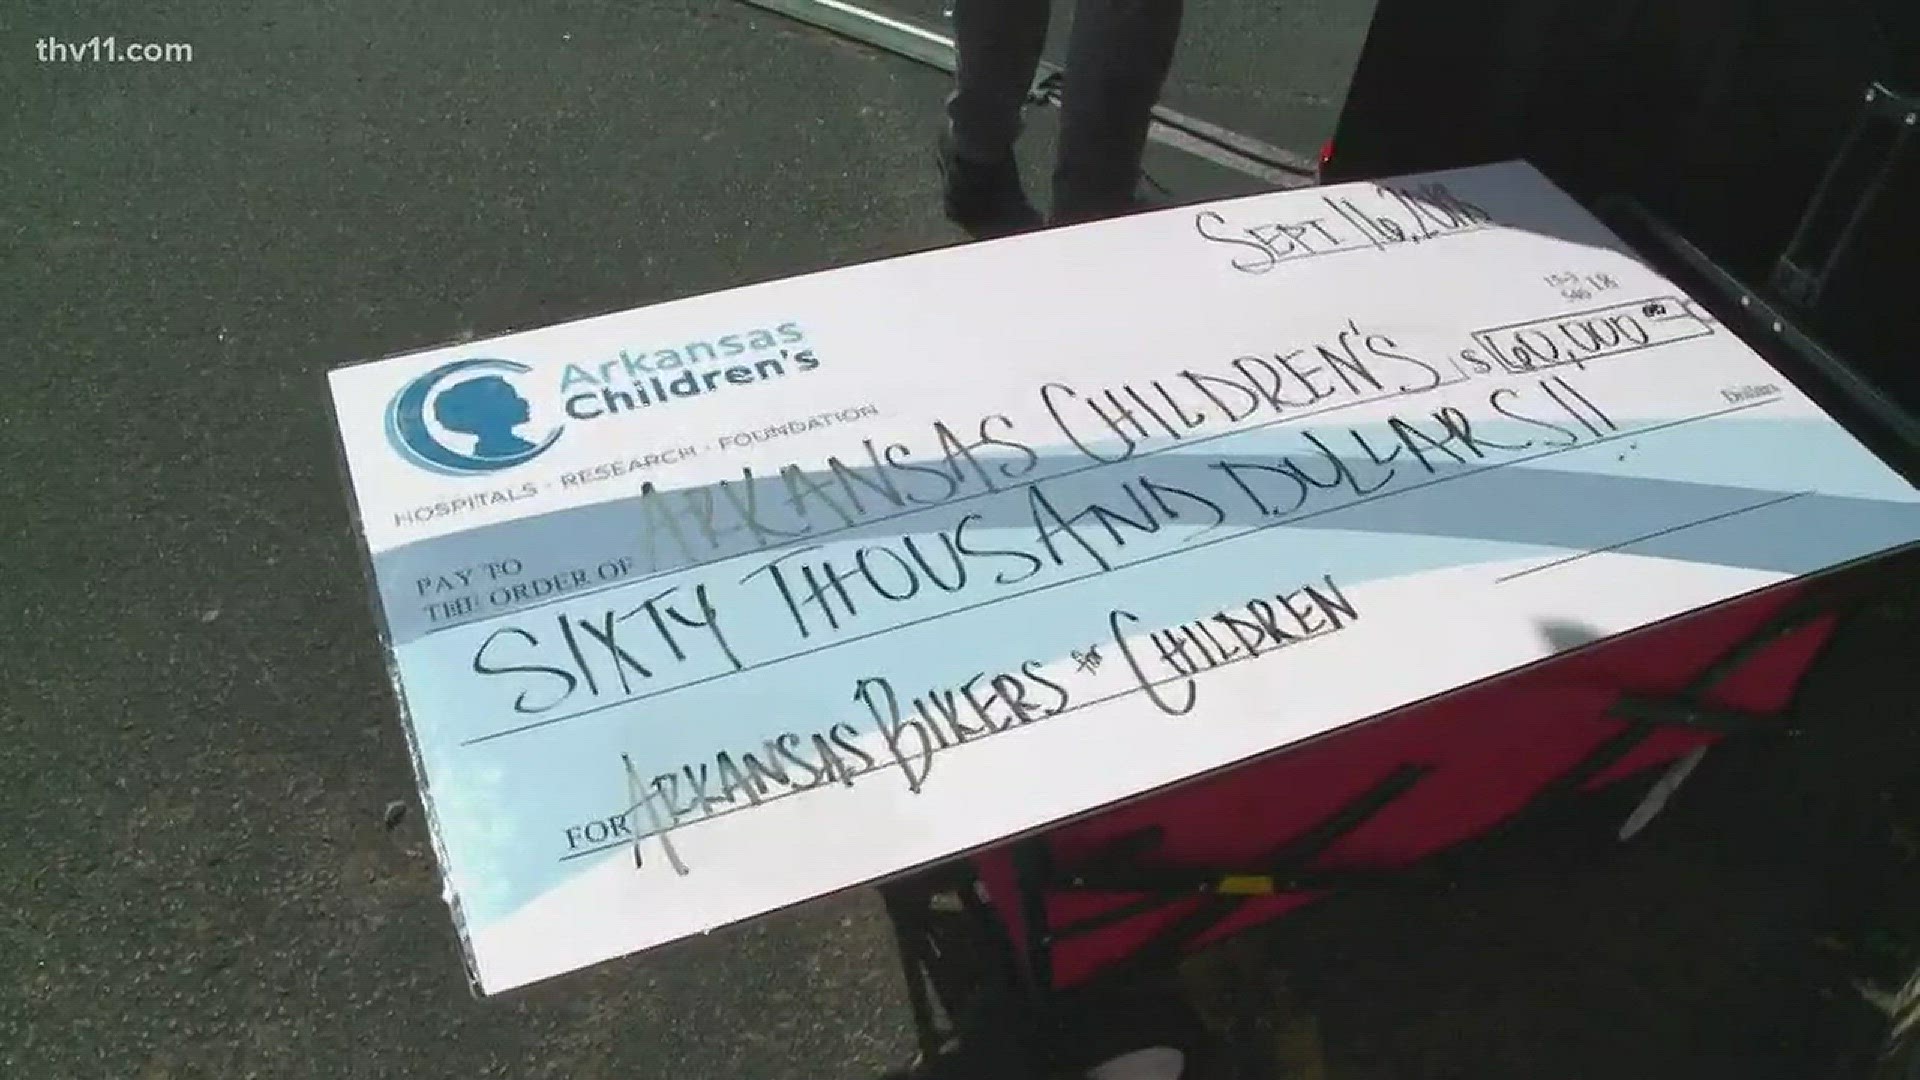 Arkansas Bikers for Children made their annual run to support Arkansas Children's Hospital.